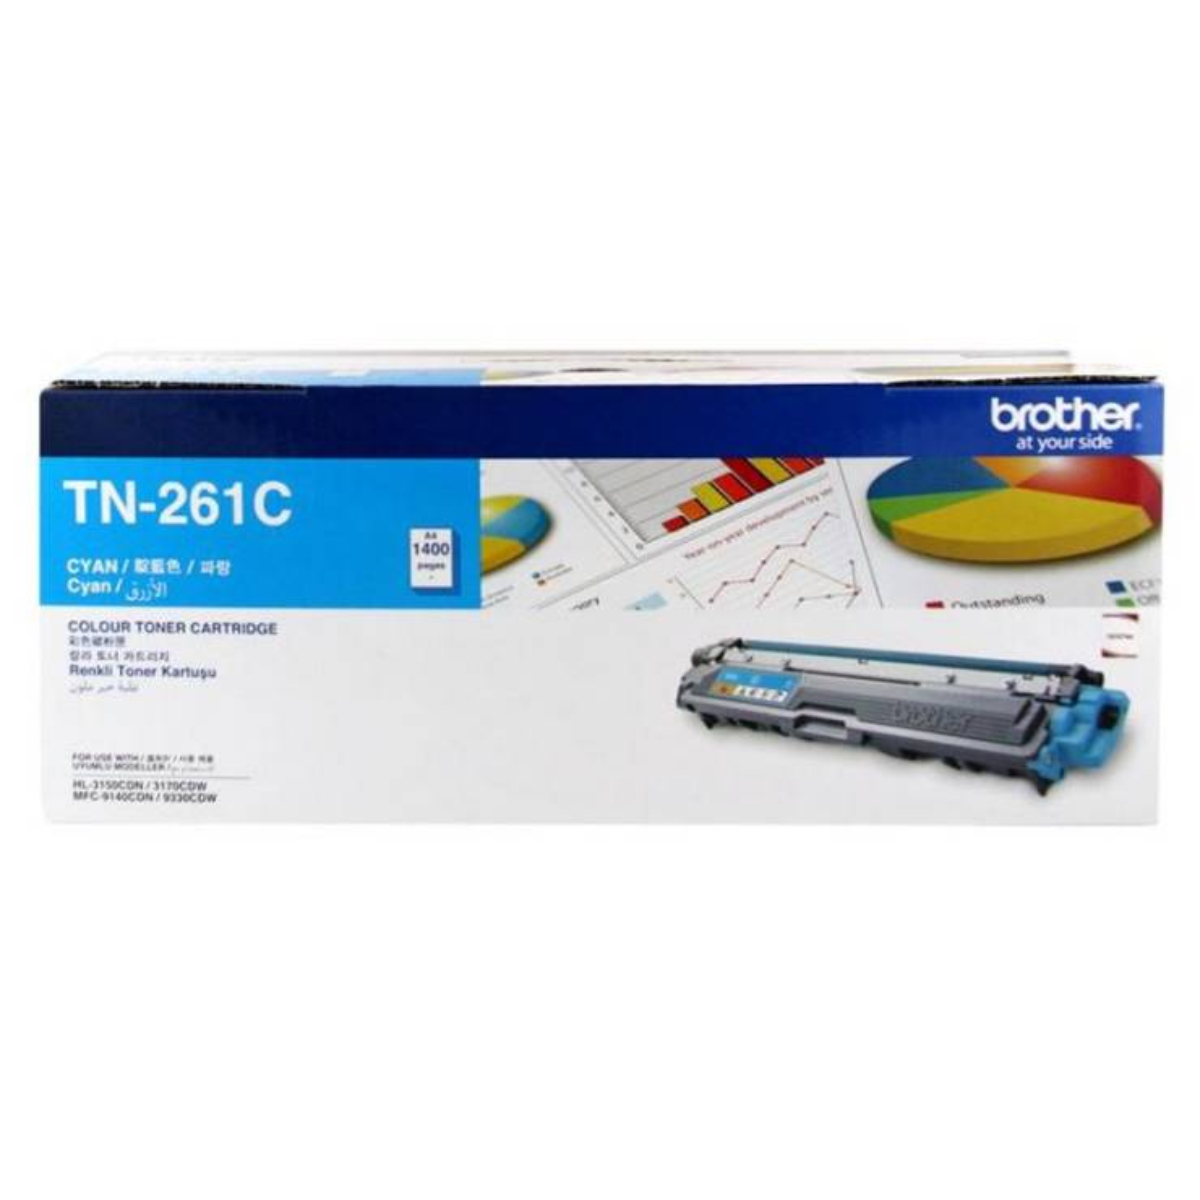 Brother Toner Cartridge (Blue) TN-261C